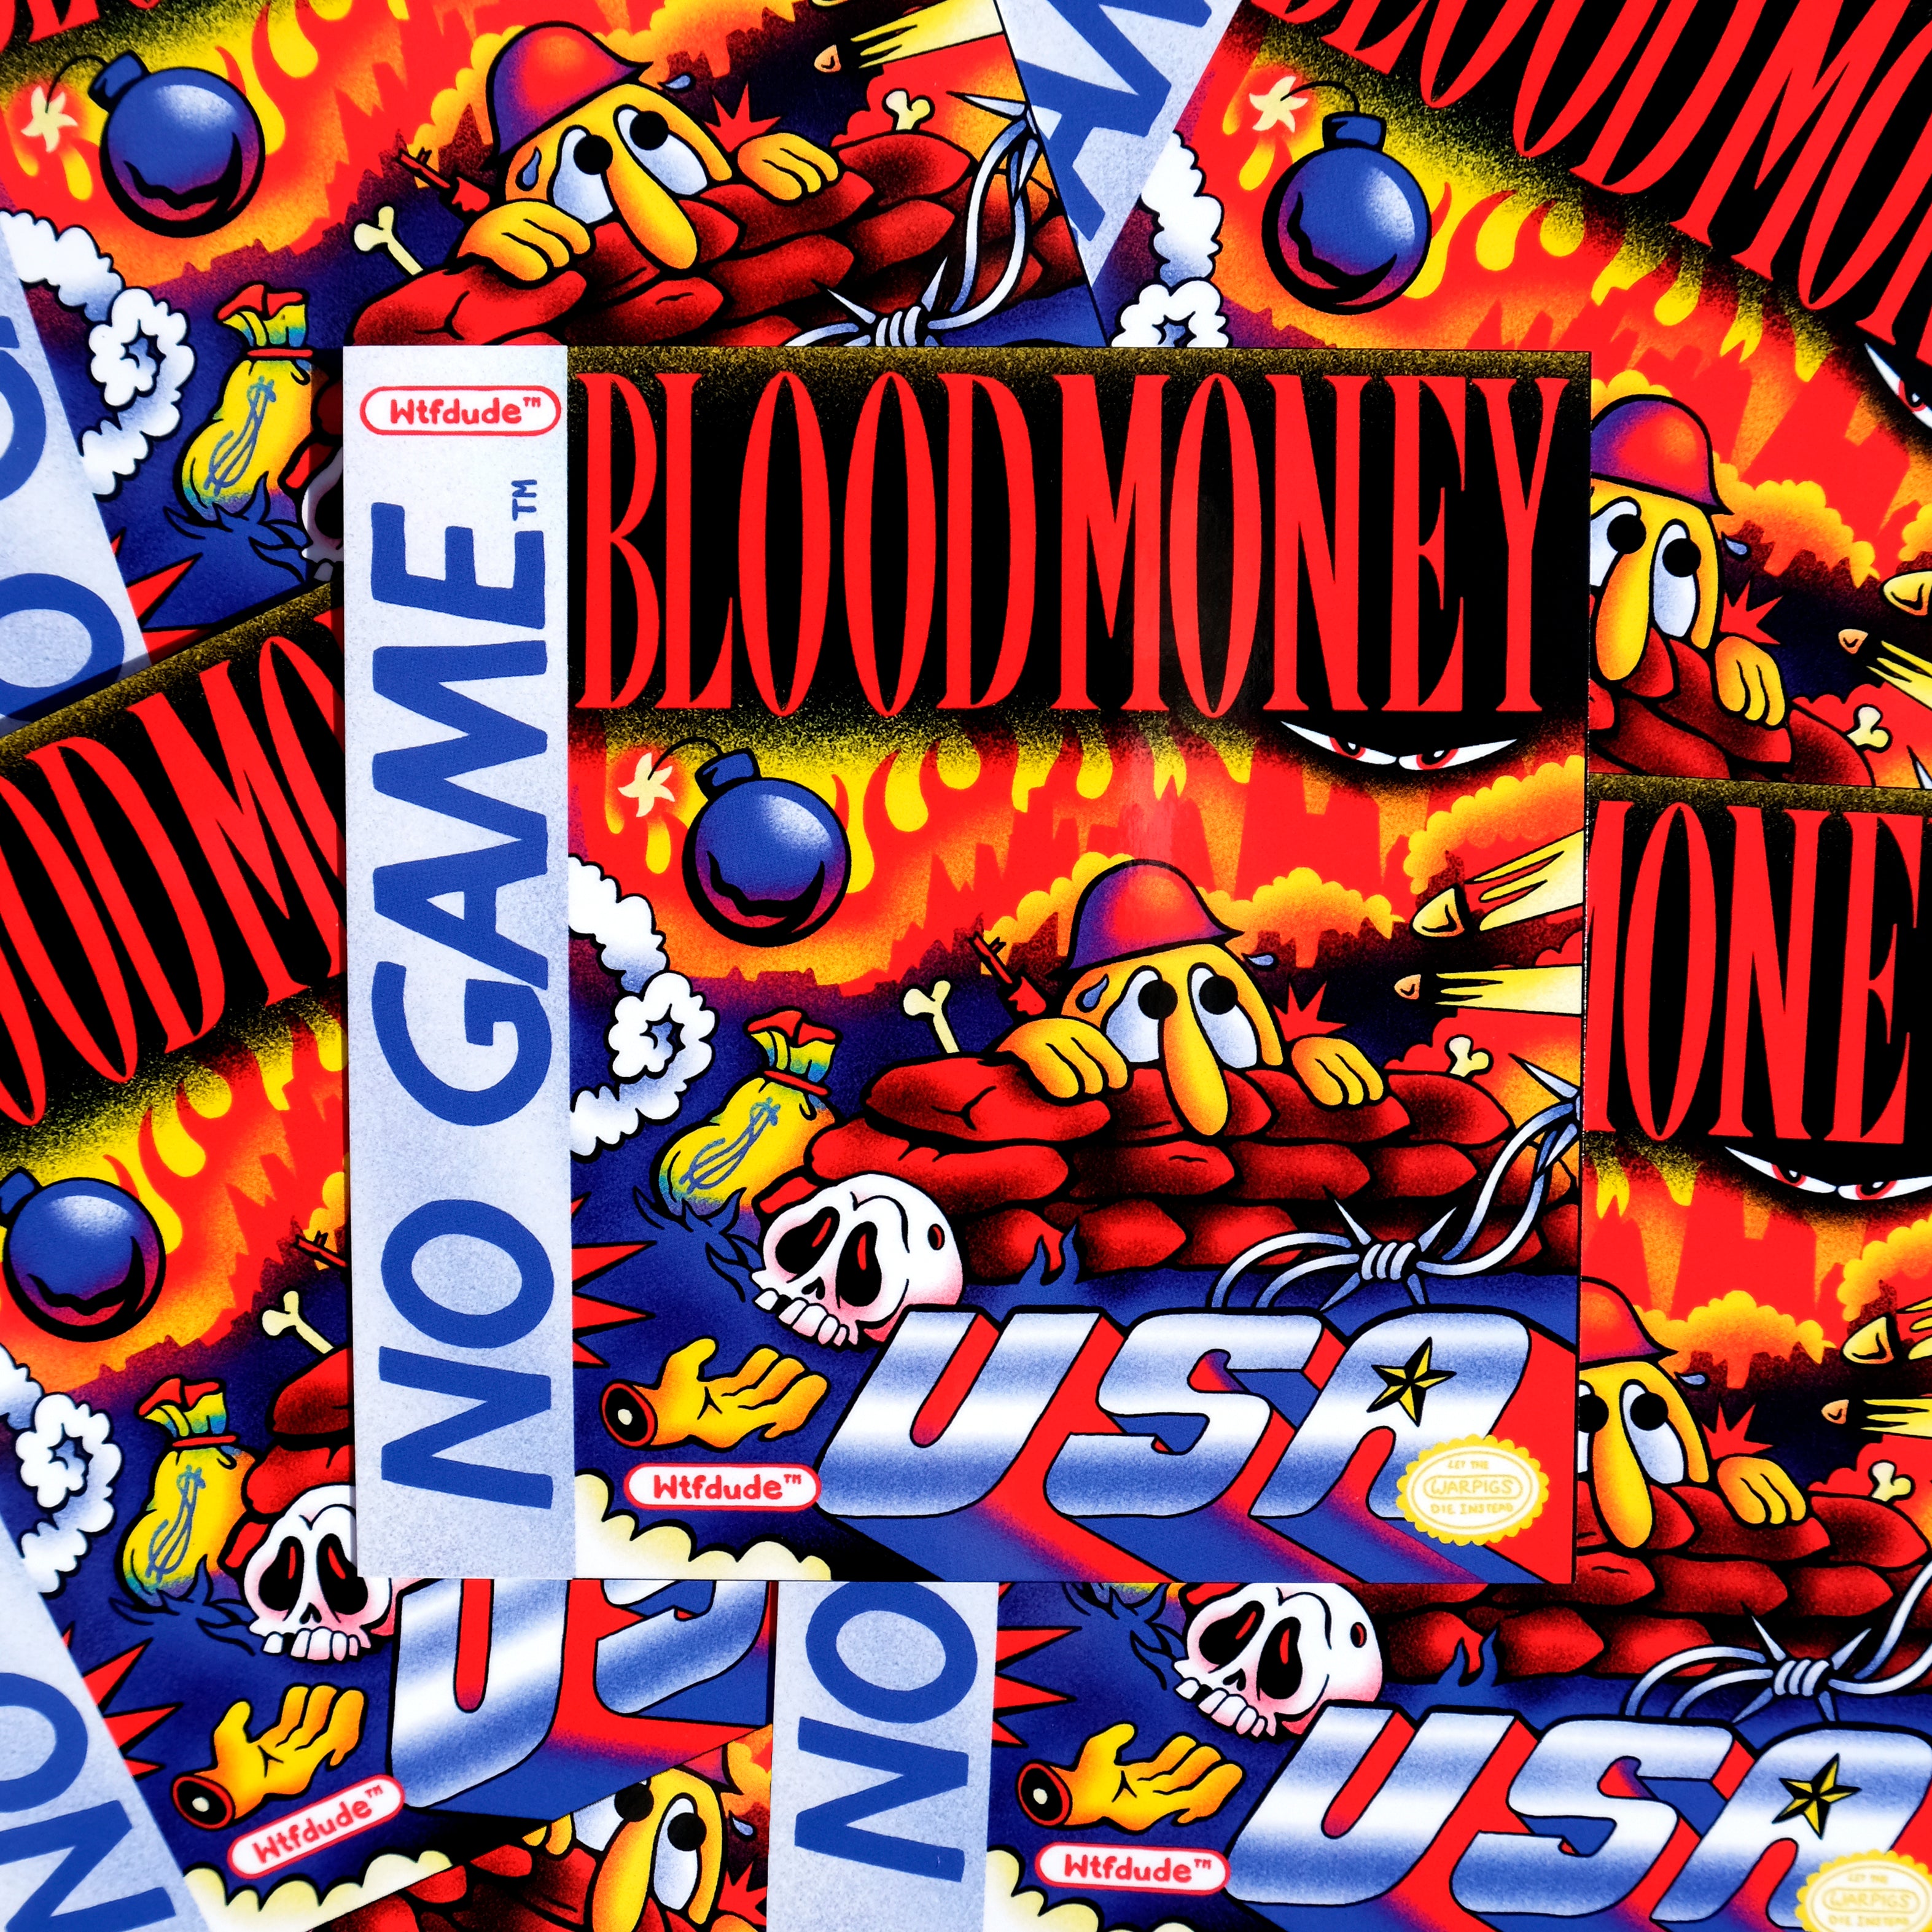 Blood Money USA Print